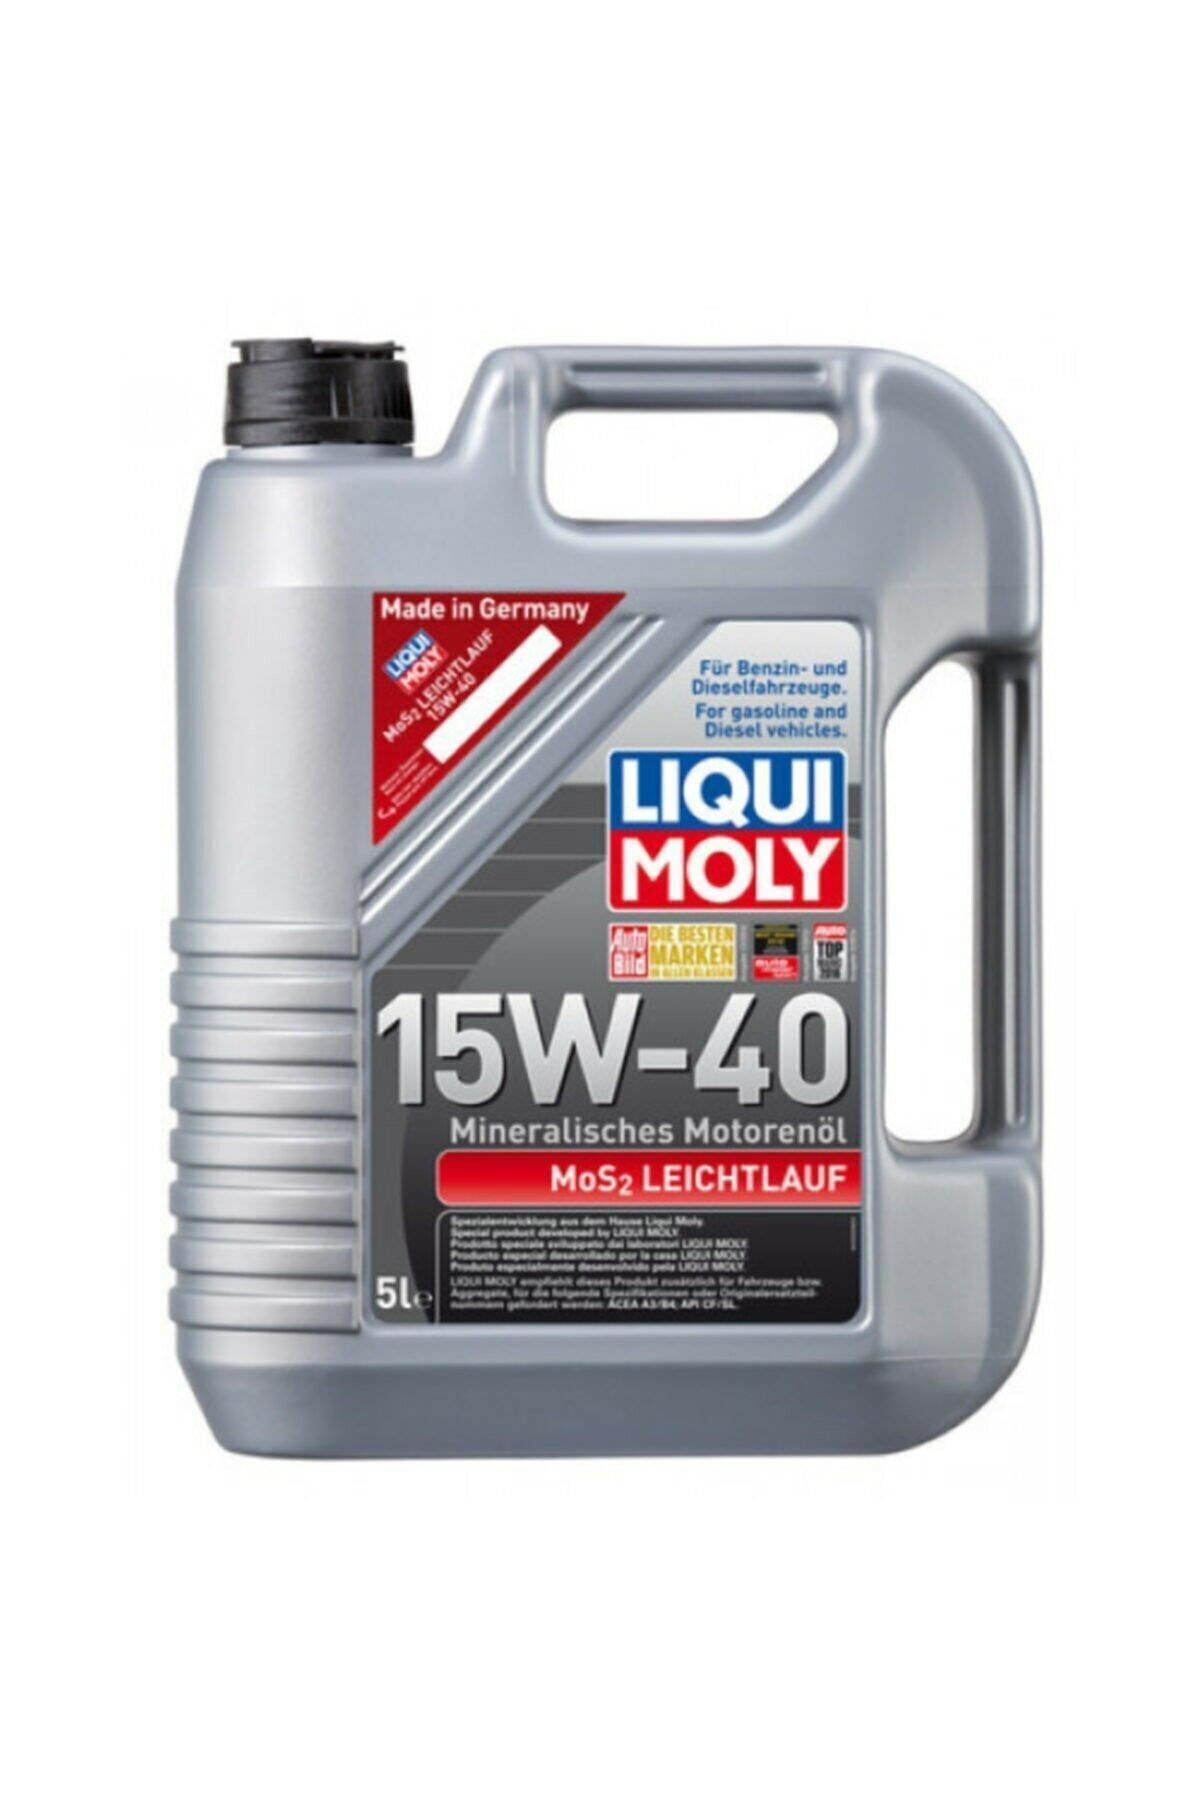 Liqui Moly Mos2 Low-fiction 15w-40 5 L